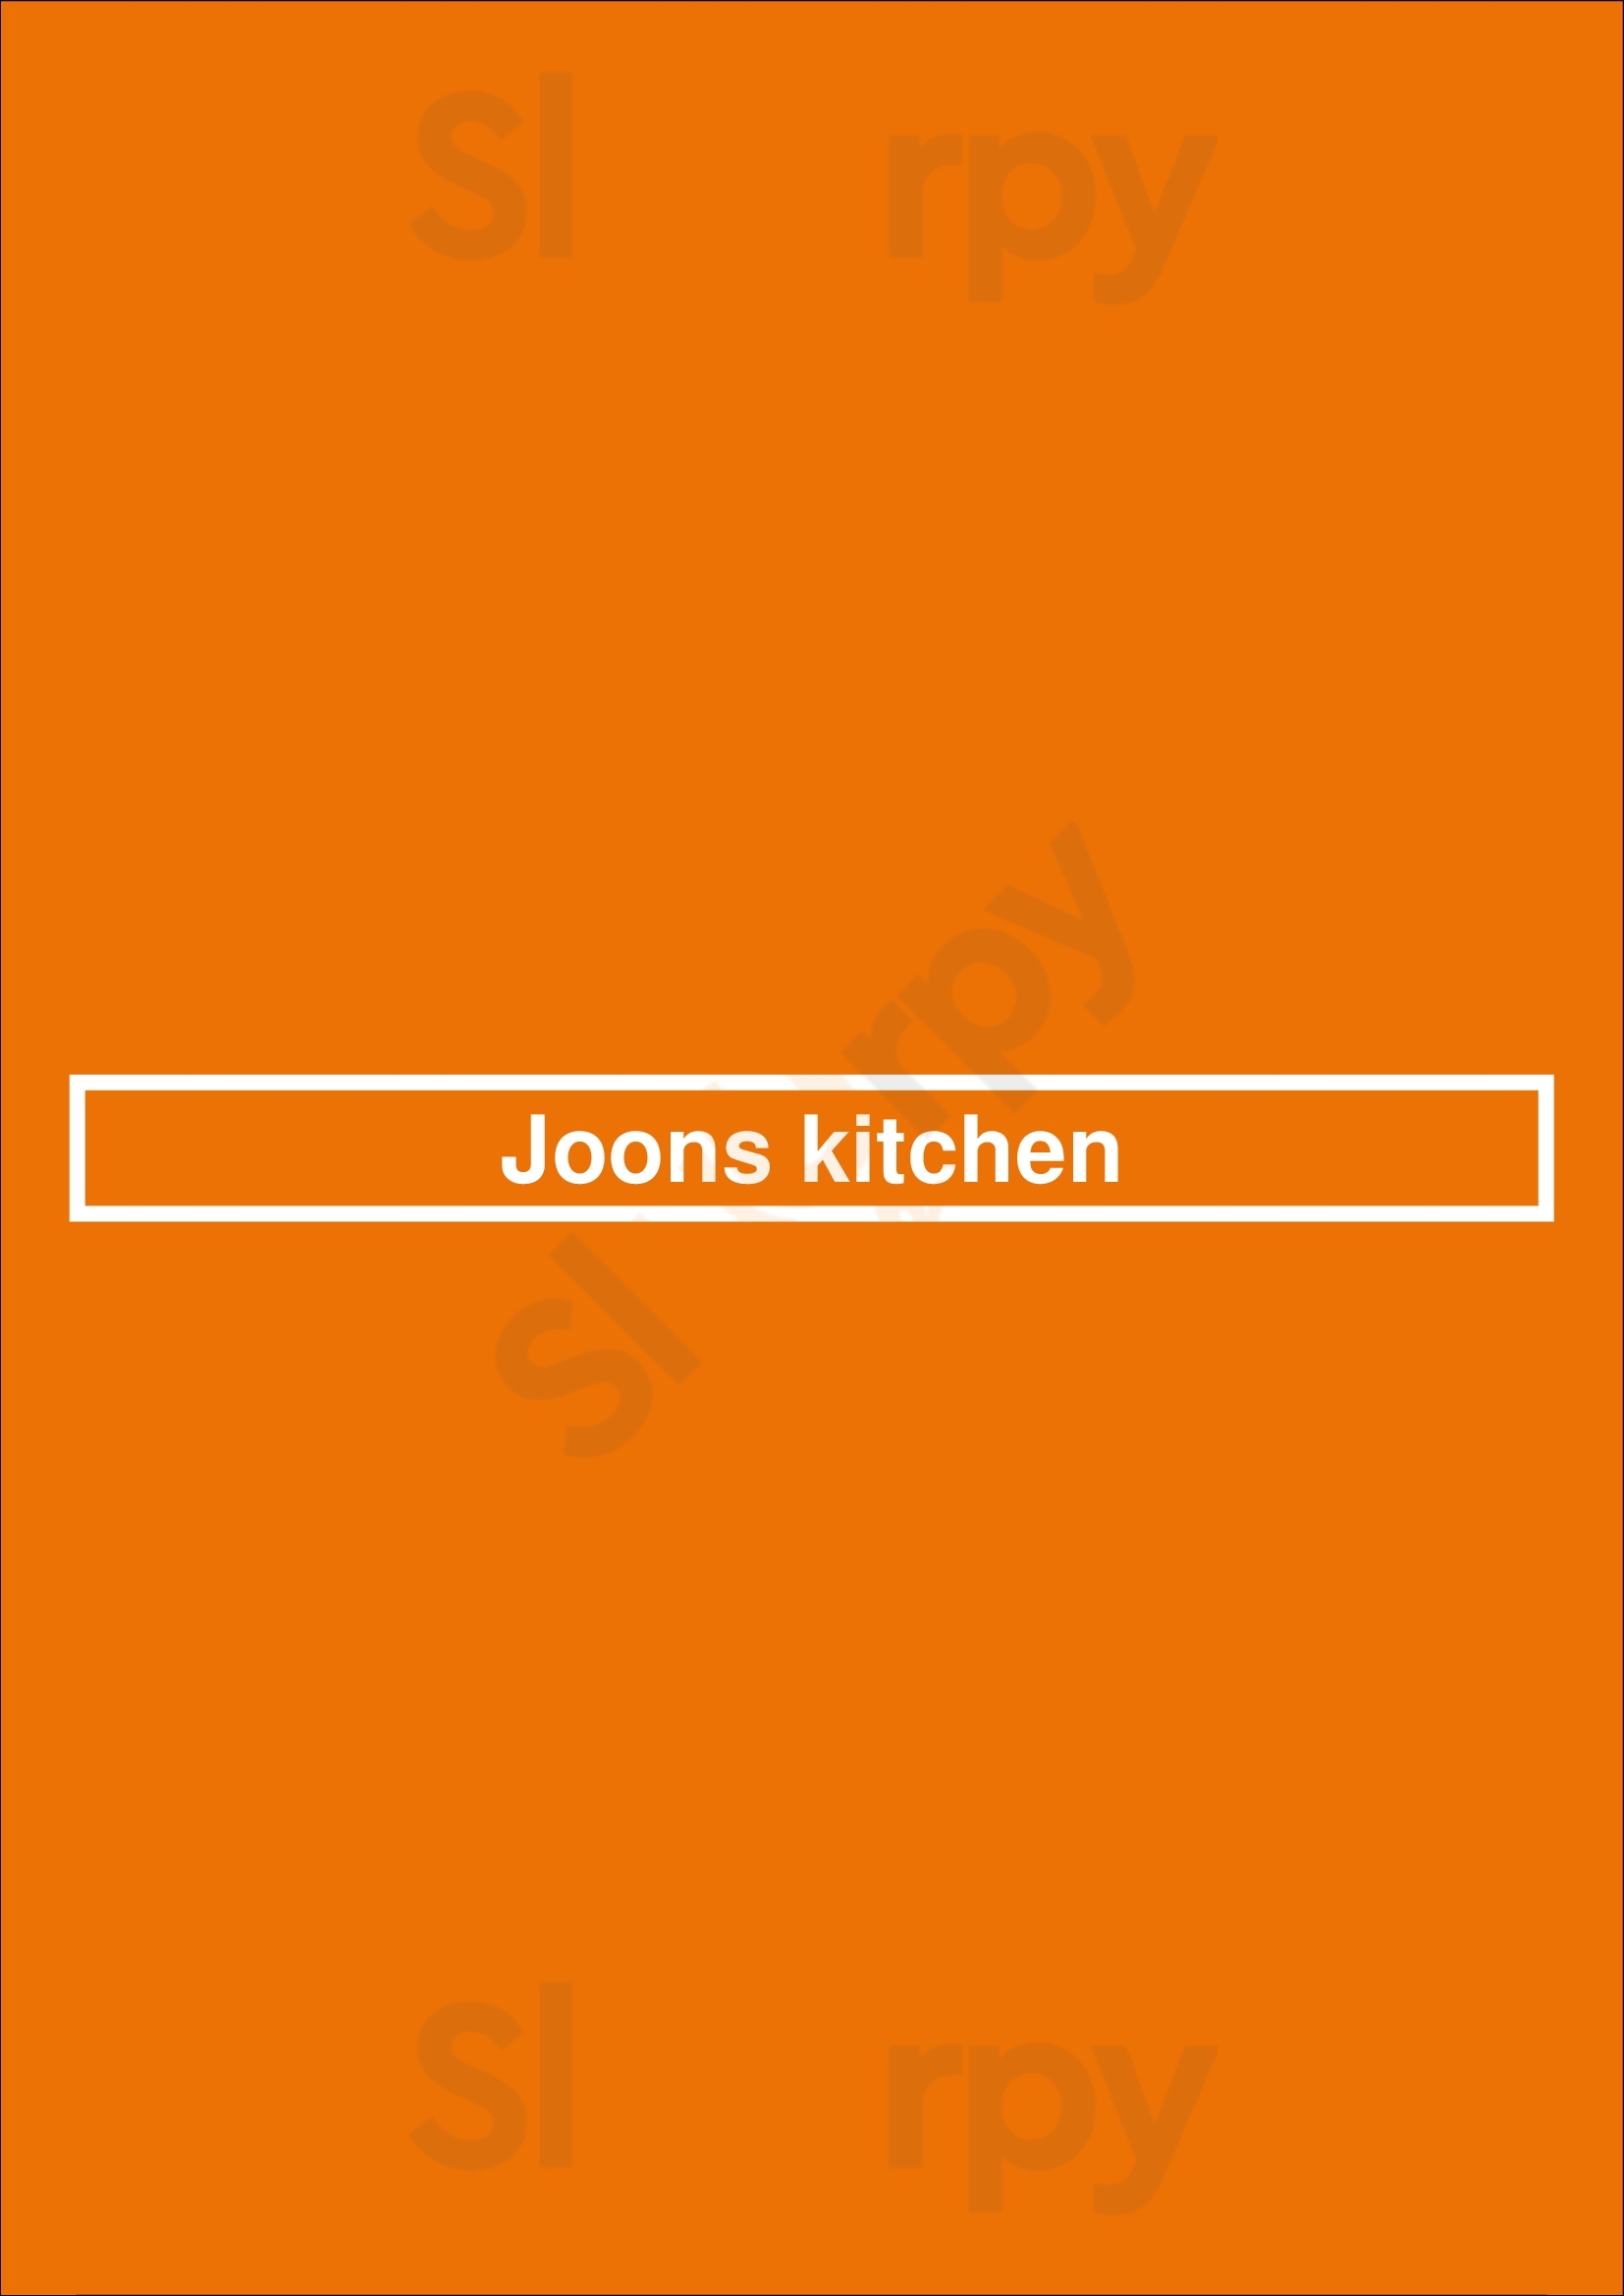 Joons Kitchen Vancouver Menu - 1